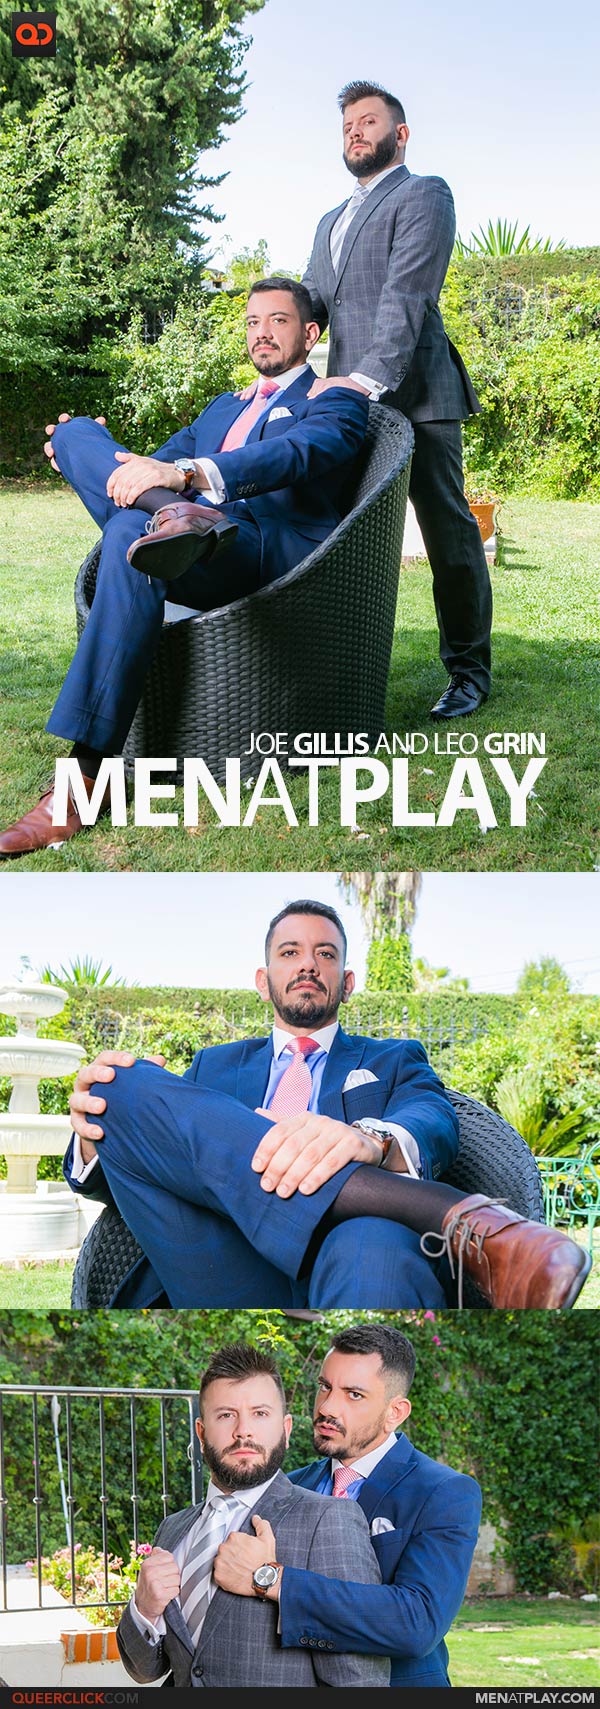 MenAtPlay: Joe Gillis and Newcomer Leo Grin